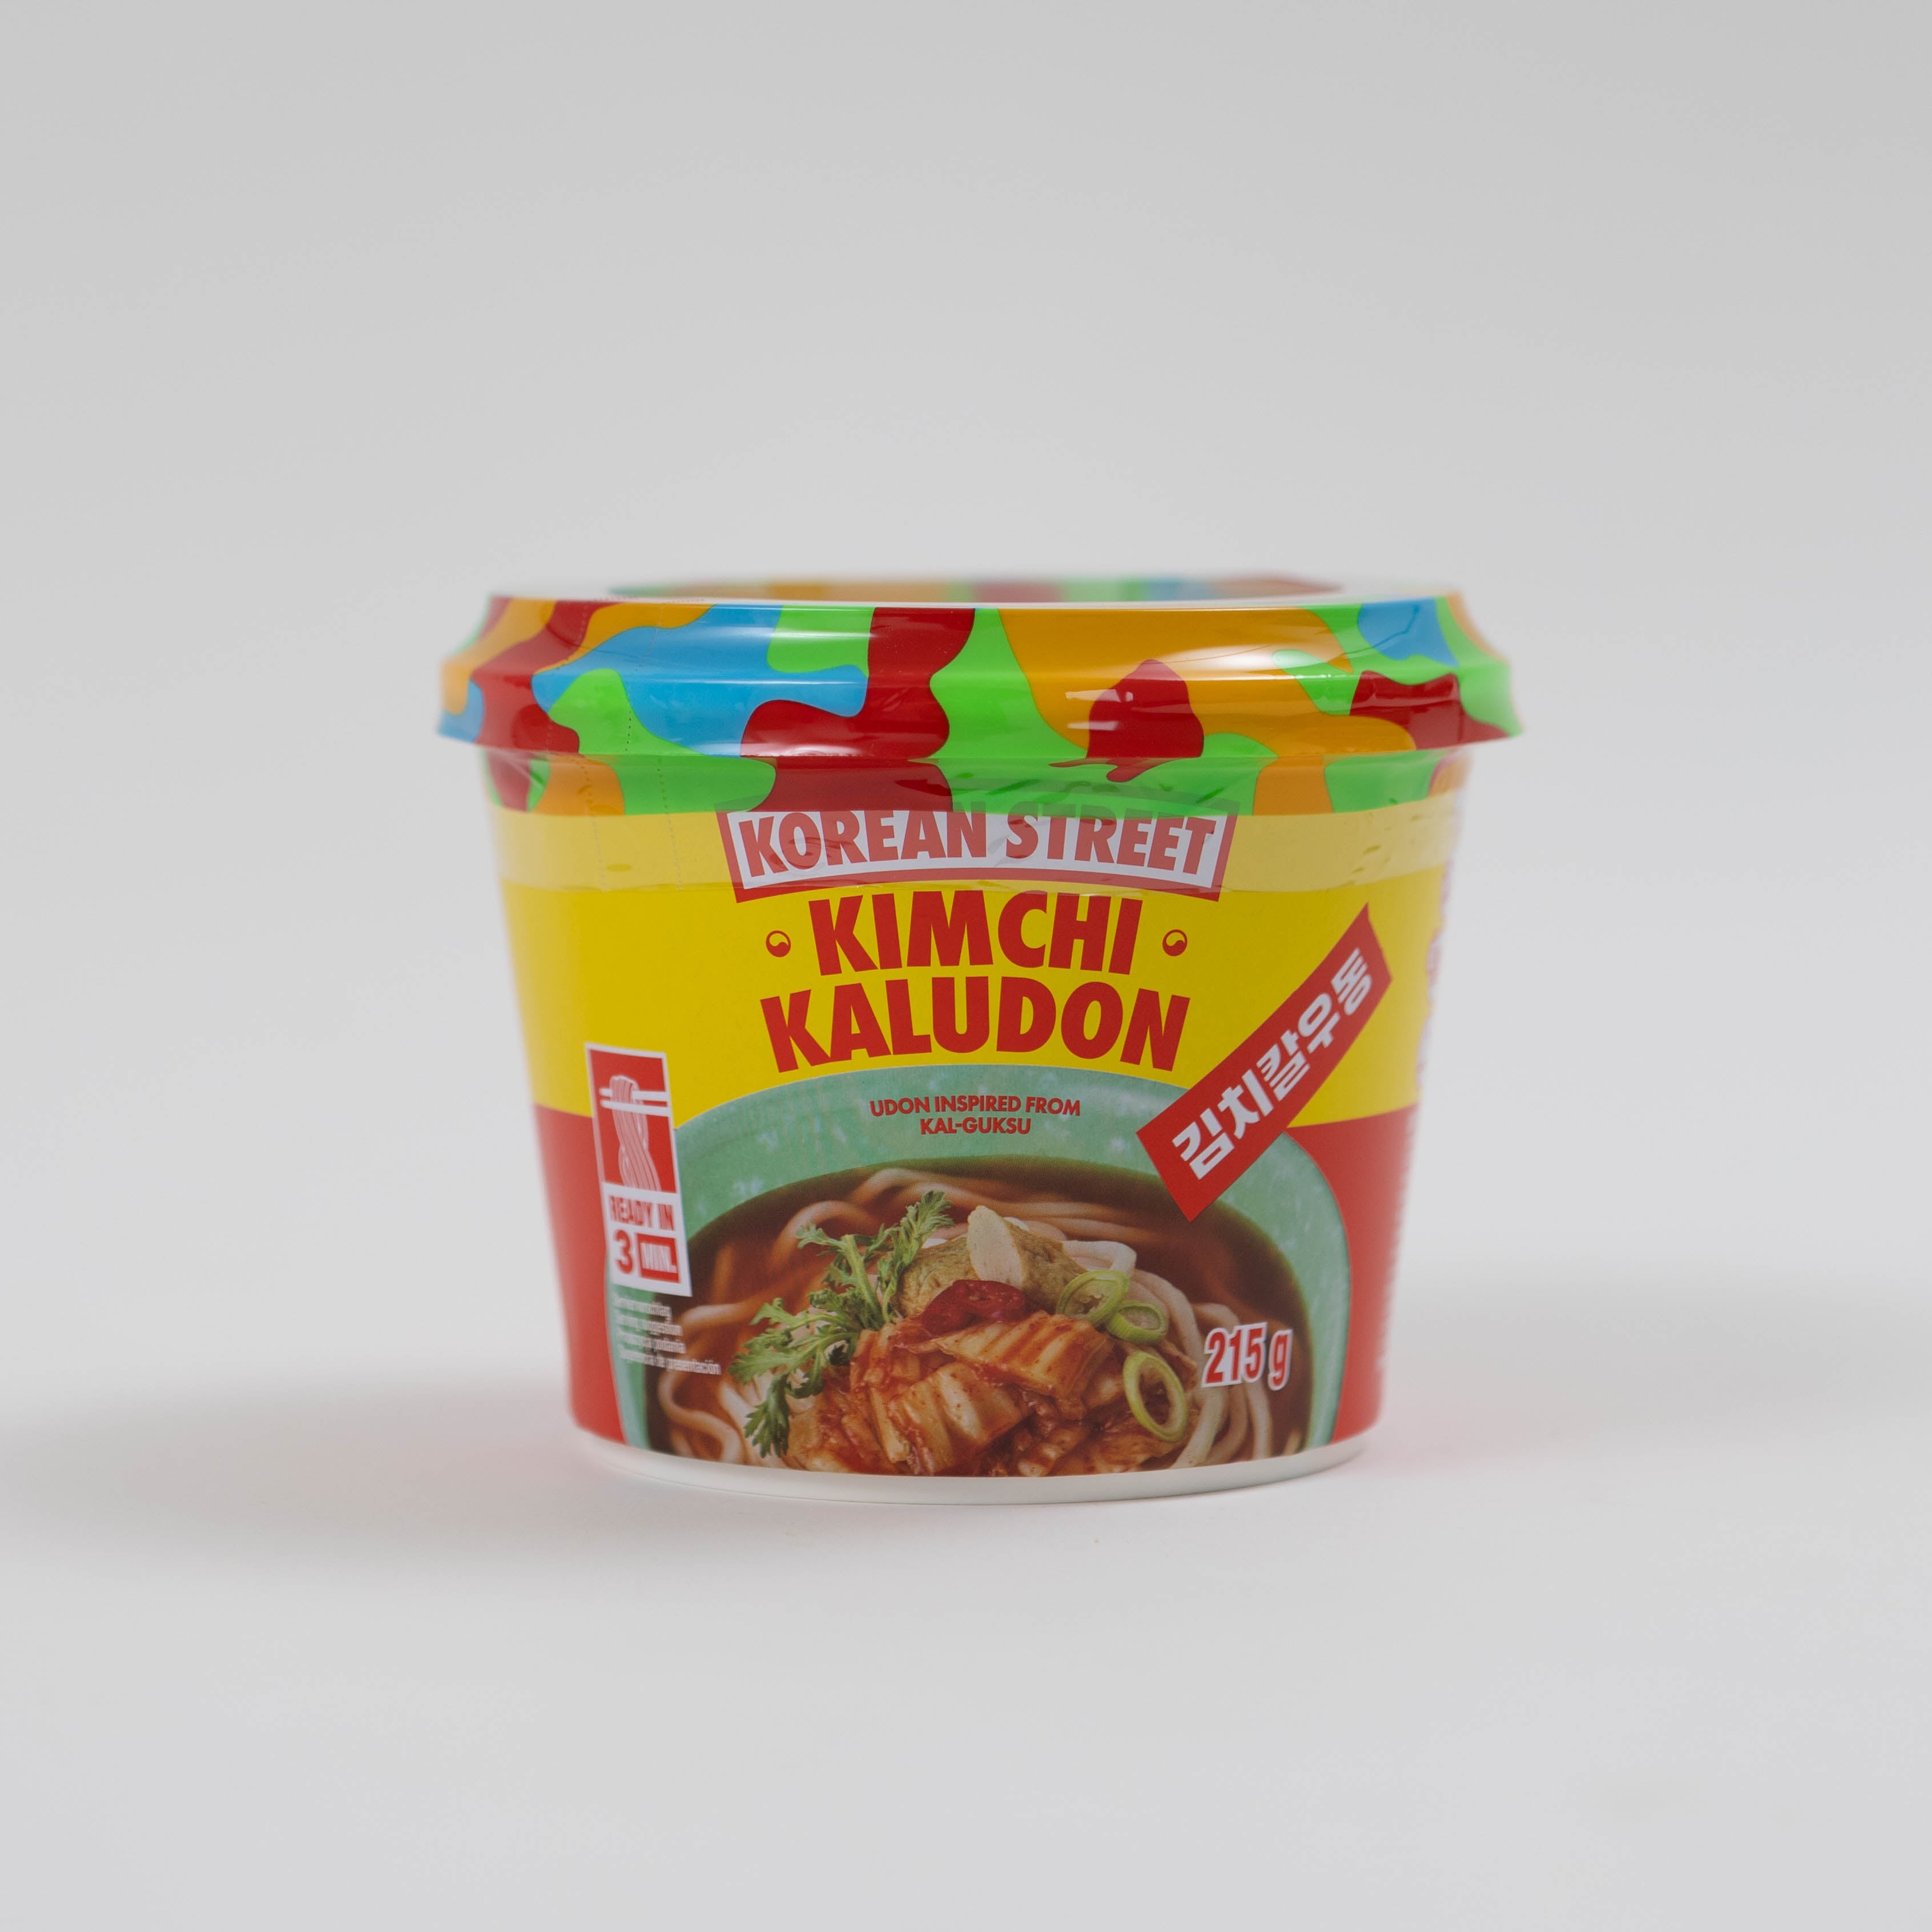 dinese.de onlineshop korean street asiashop kaludon kimchu kalguksu asiatische lebensmittel